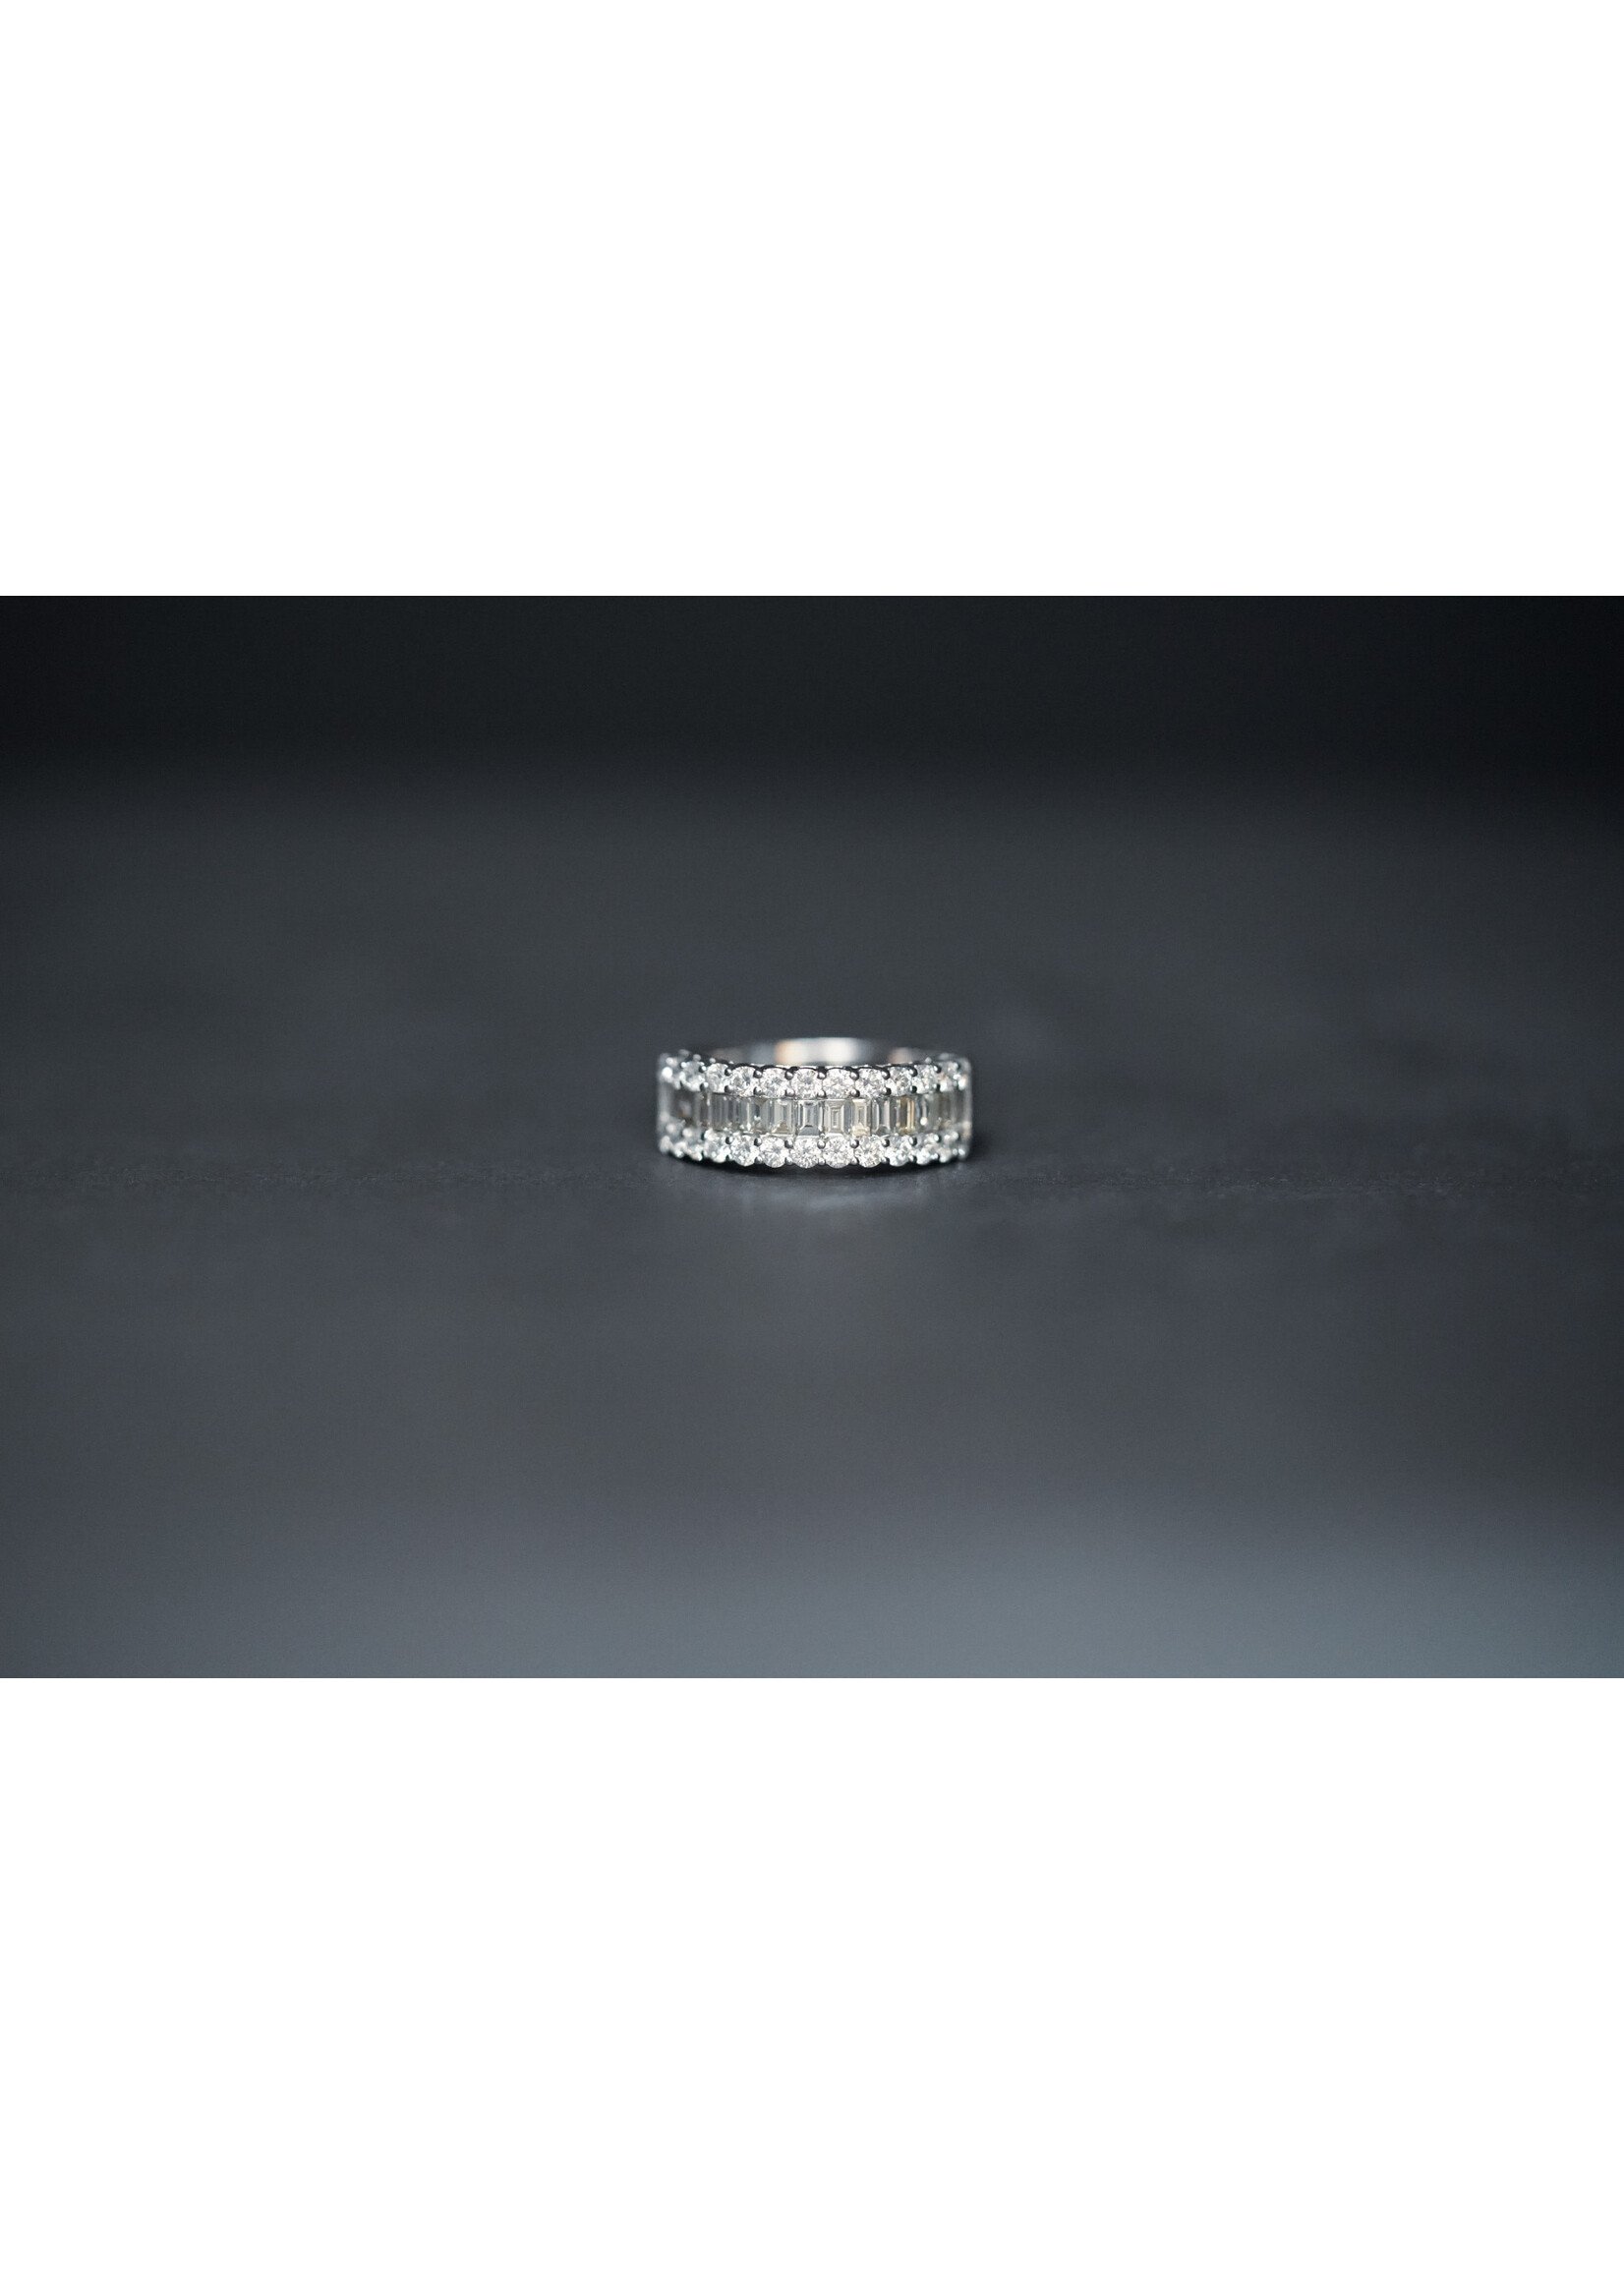 14KW 5.83g 1.38ctw Baguette & Round Diamond Fashion Ring (size 7)